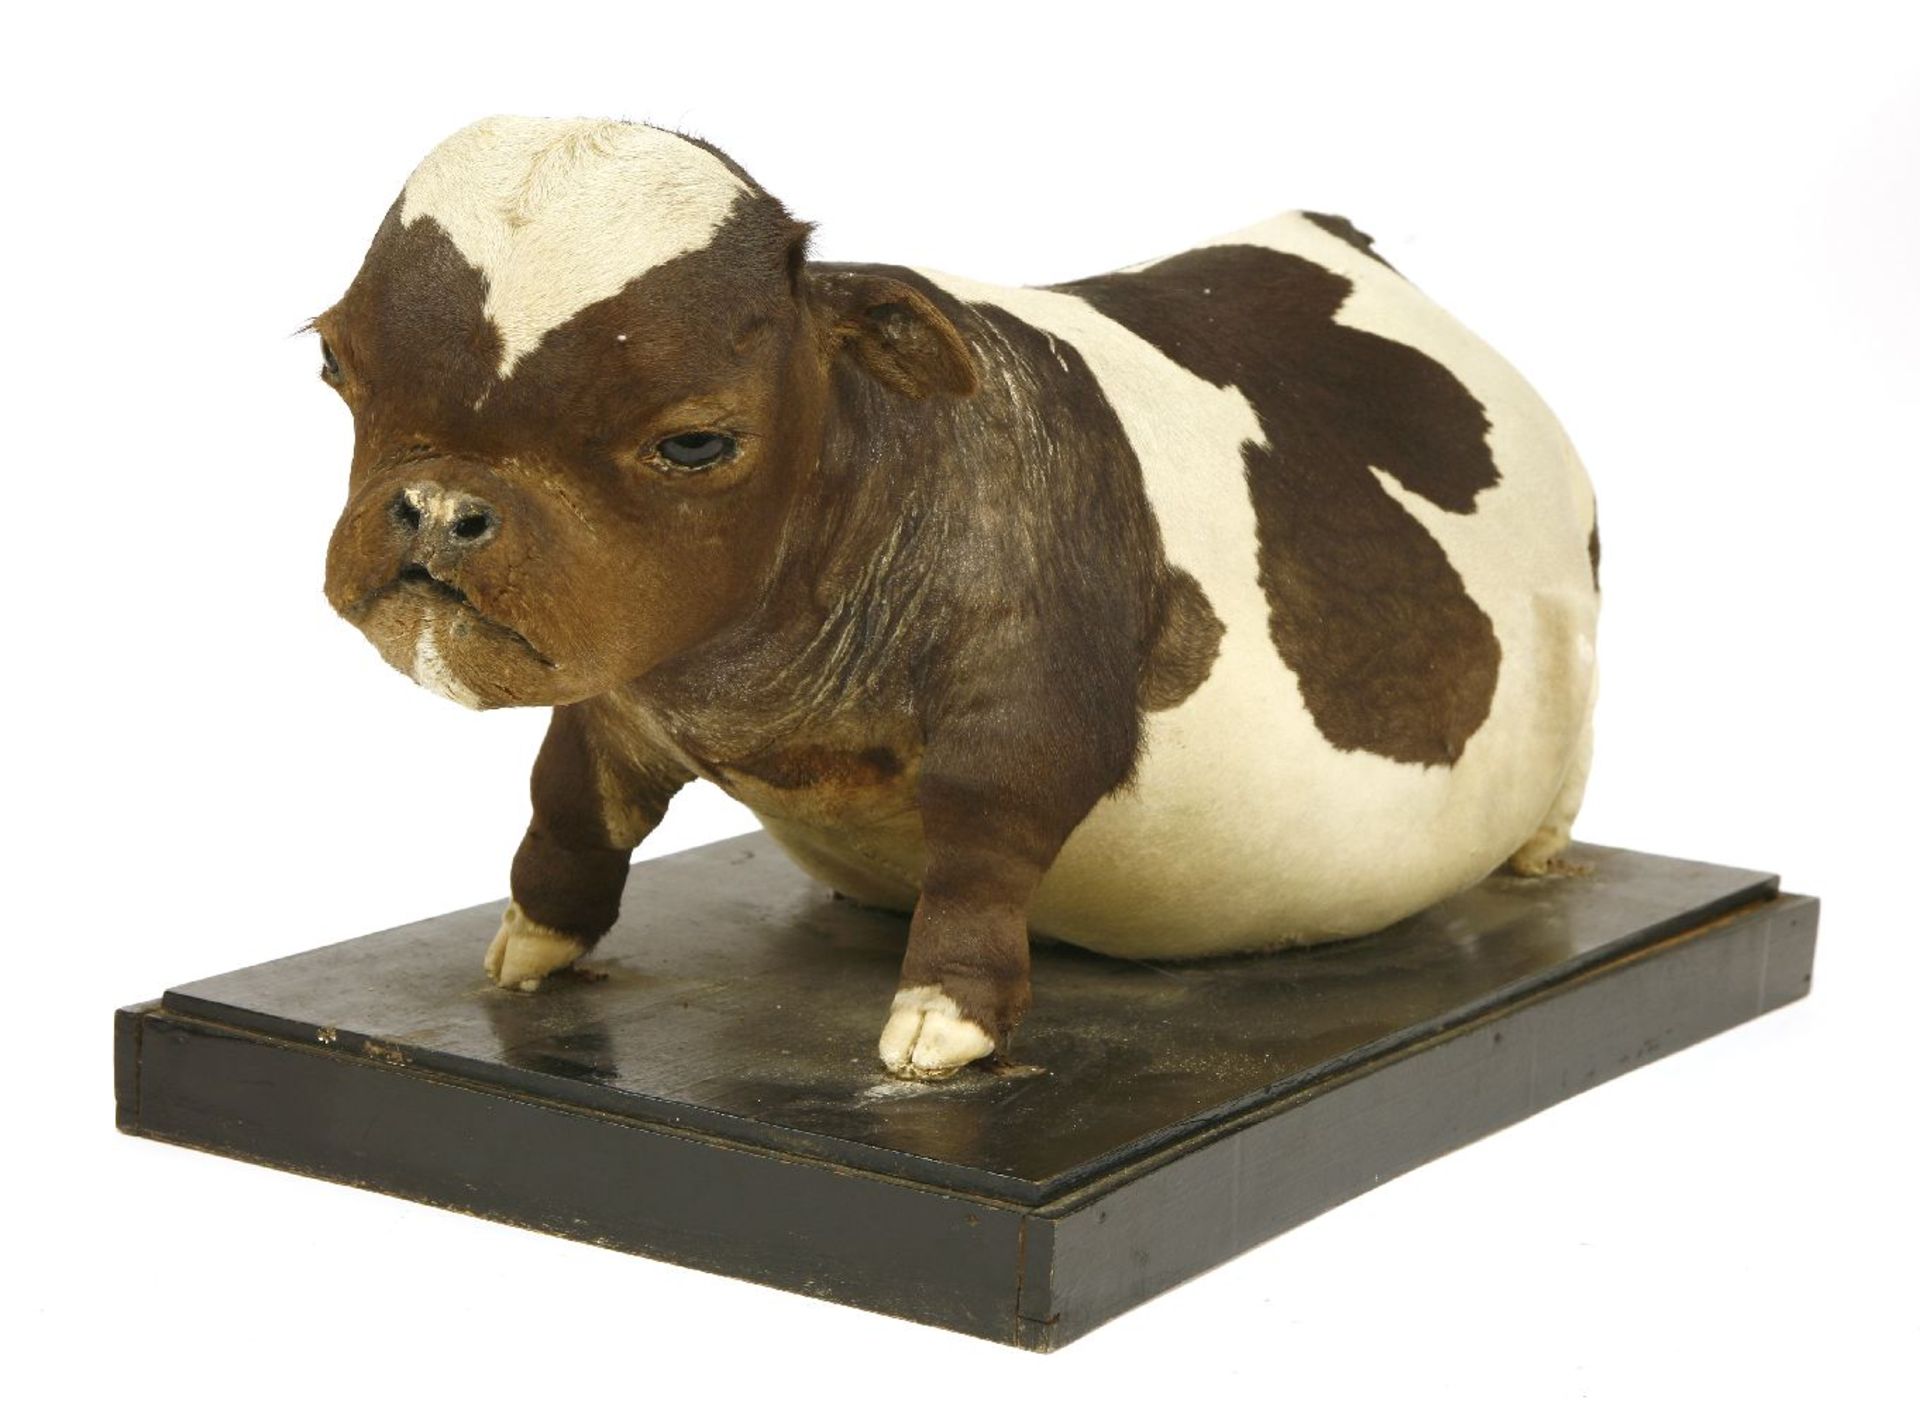 FREAK BULLDOG CALF,late 19th century, a rare Victorian taxidermy bulldog calf, mounted in a standing